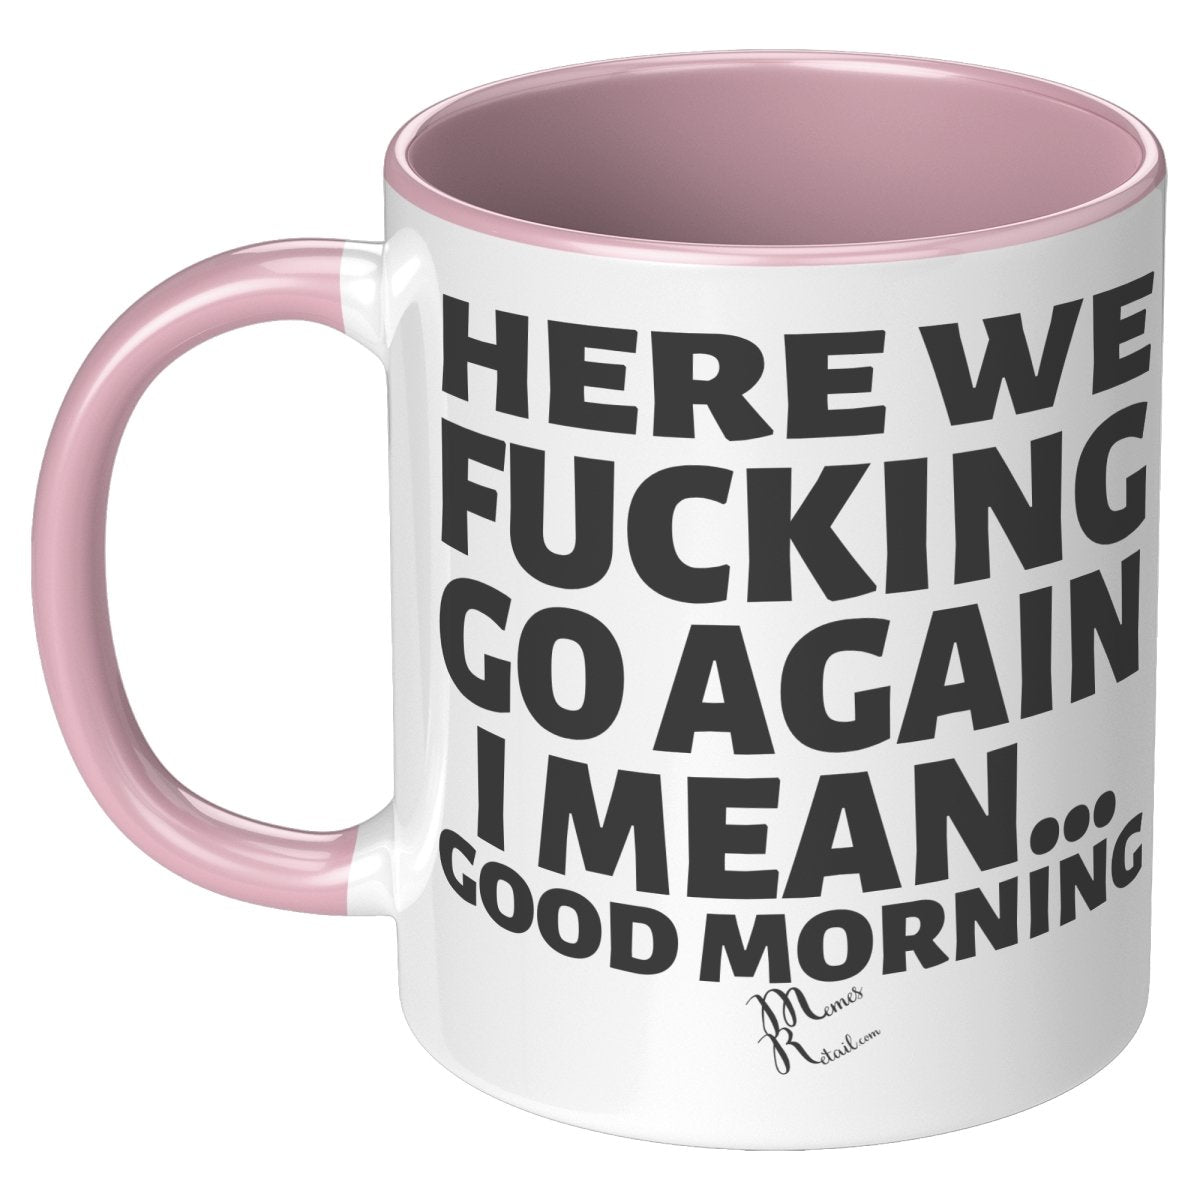 Here We Fucking Go Again, I mean...good morning - Big Lettering Mugs, 11oz / Pink Accent - MemesRetail.com